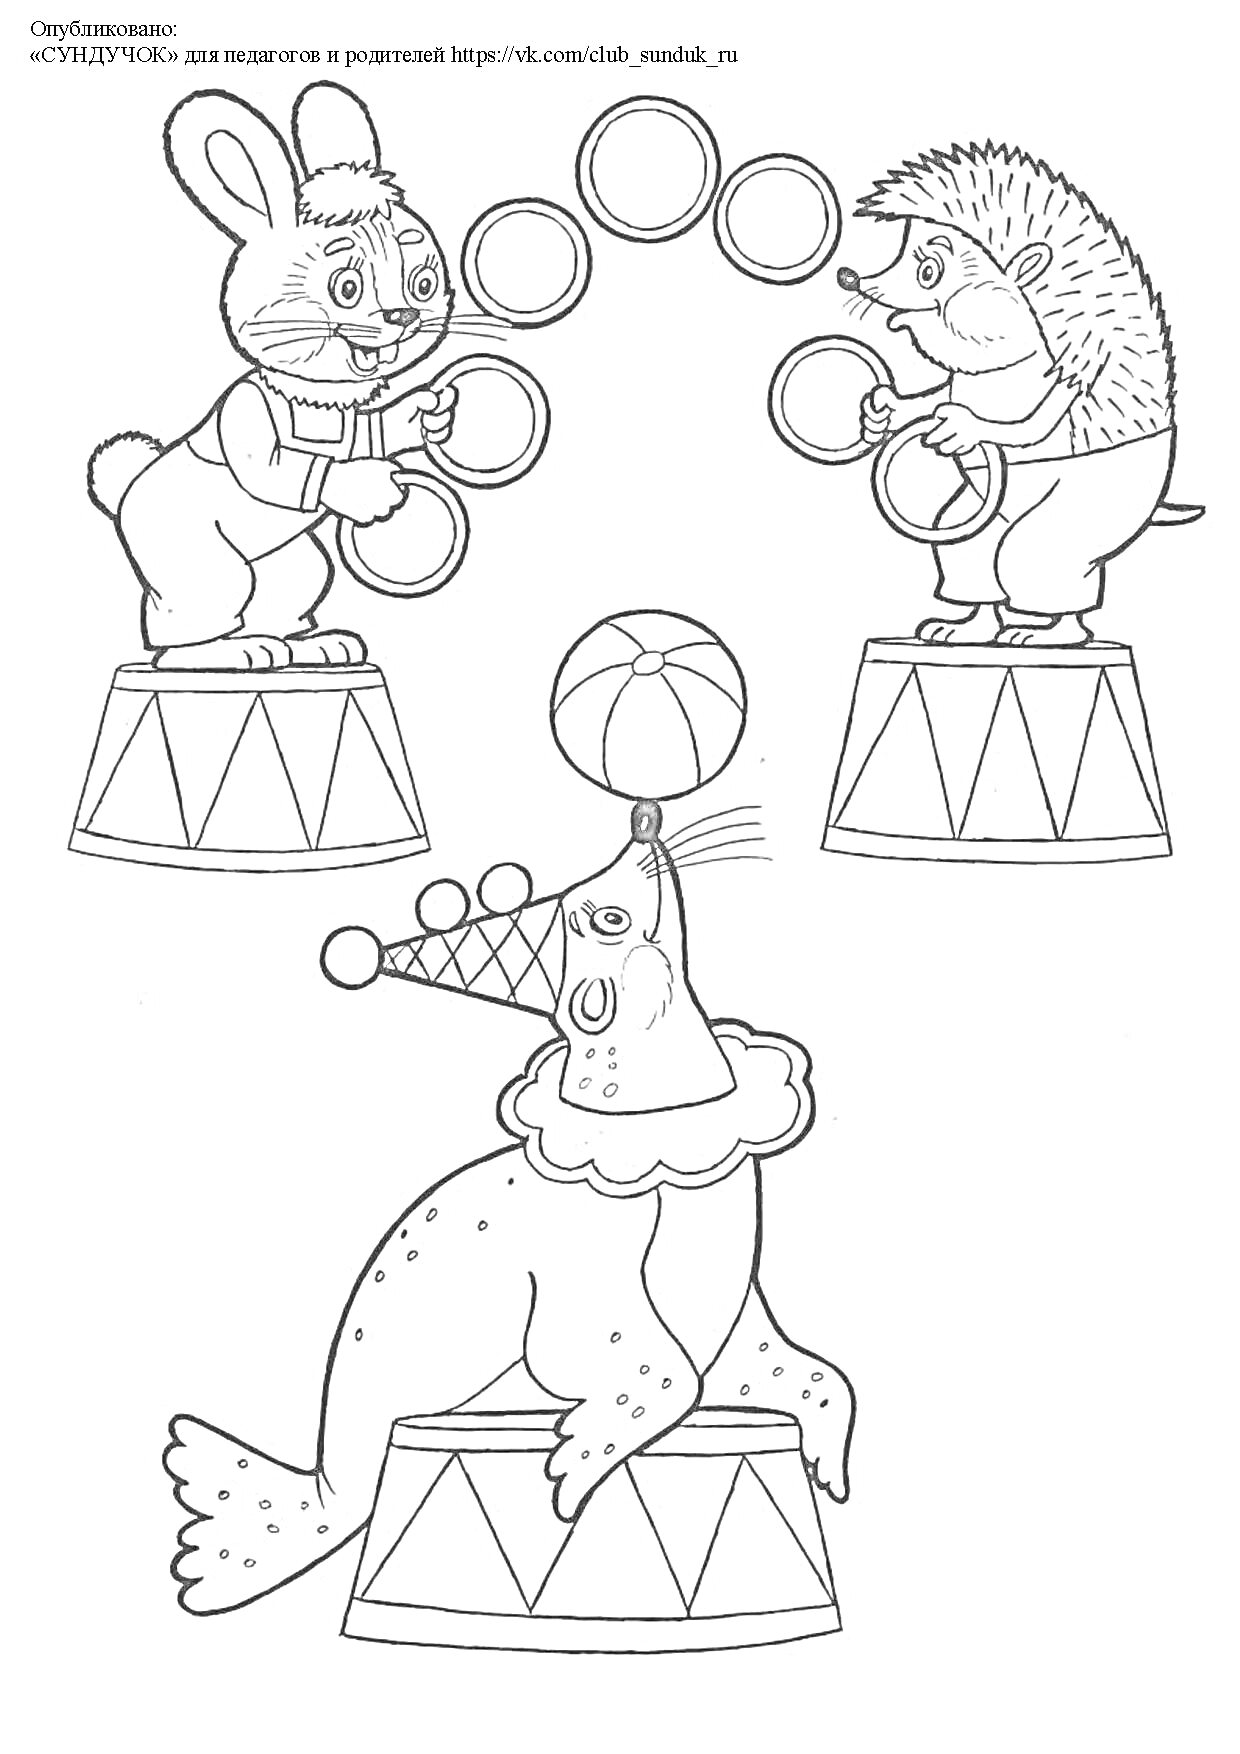 Раскраска Кролик и ёжик с обручами на тумбах, морской лев с мячом на носу на тумбе